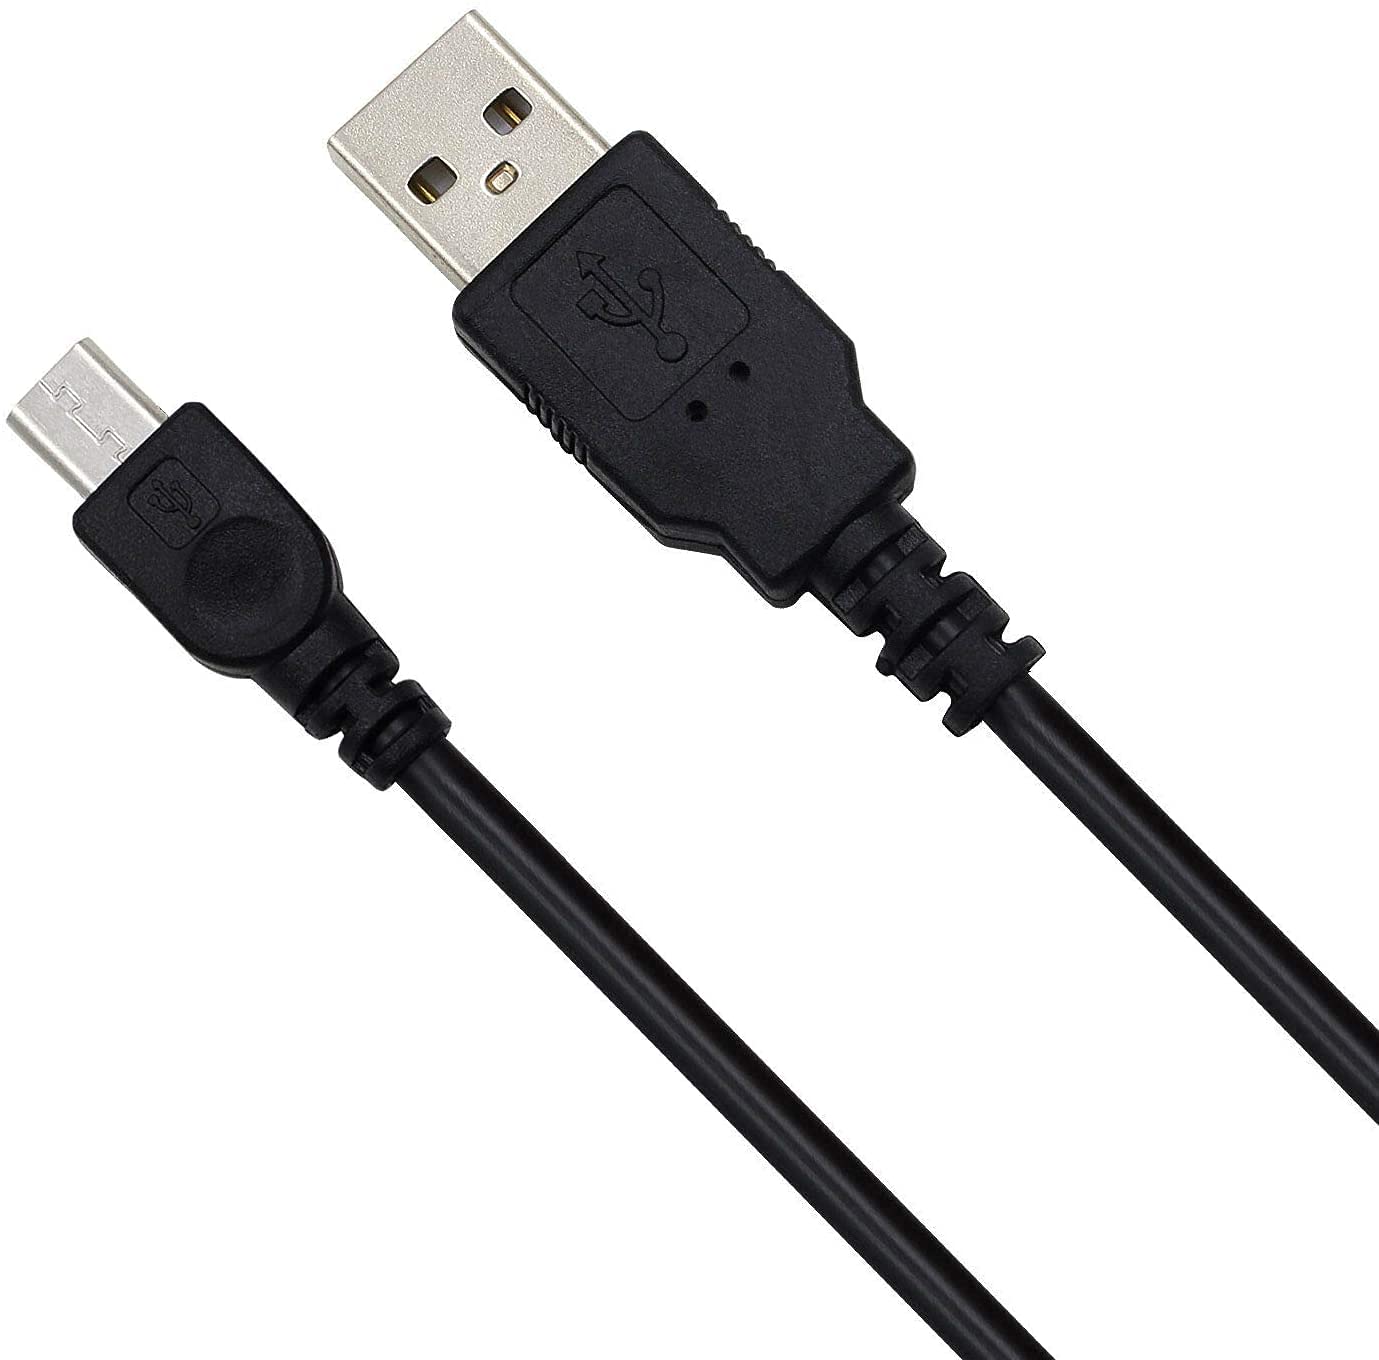 BestCH 3ft USB Data PC Cable Cord For Elmo Elm0 MO-1 M0-1 1337-1 13371 1337-2 13372 1337-3 13373 1337-164 1337164 MO-1W M0-1W 1336-12 133612 Document Camera Visual Presenter